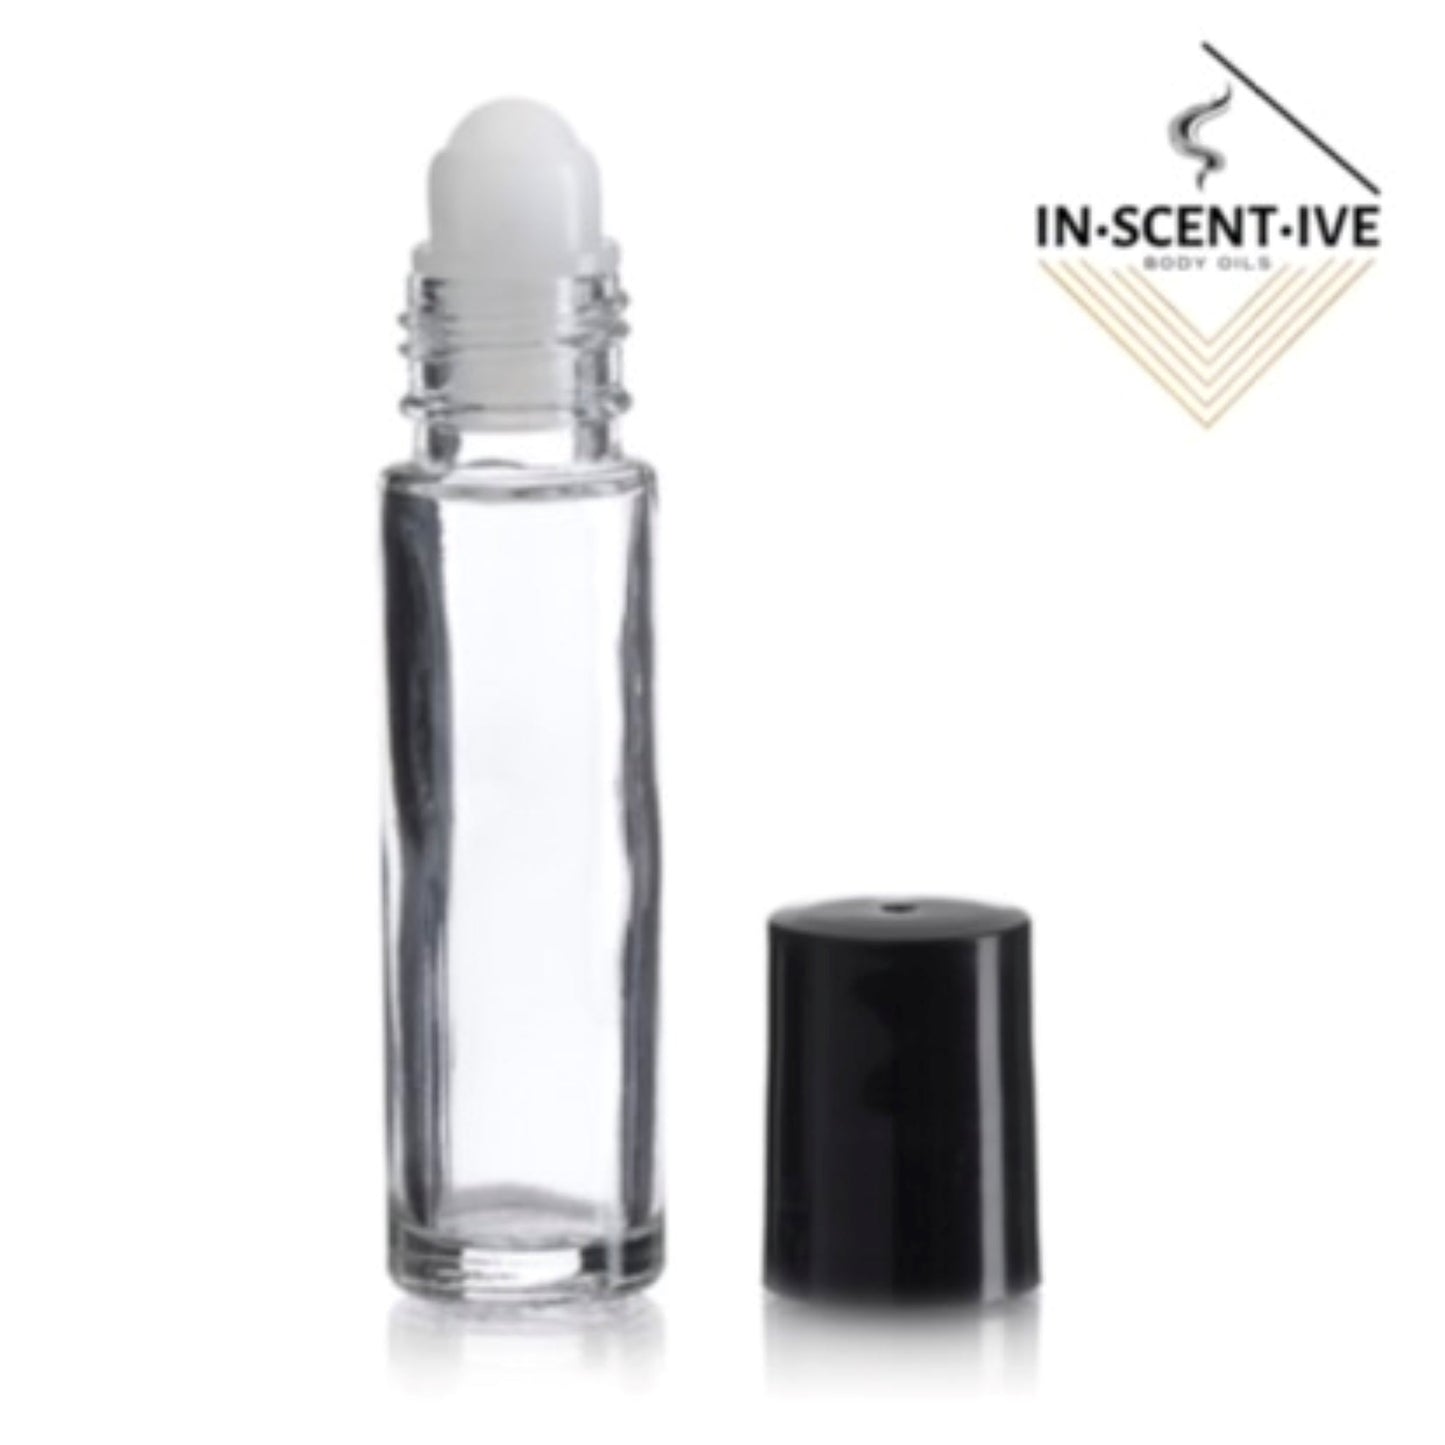 Roja Dove Elysium Pour Homme- Our Version for Men - Premium Fragrance & Body Oil